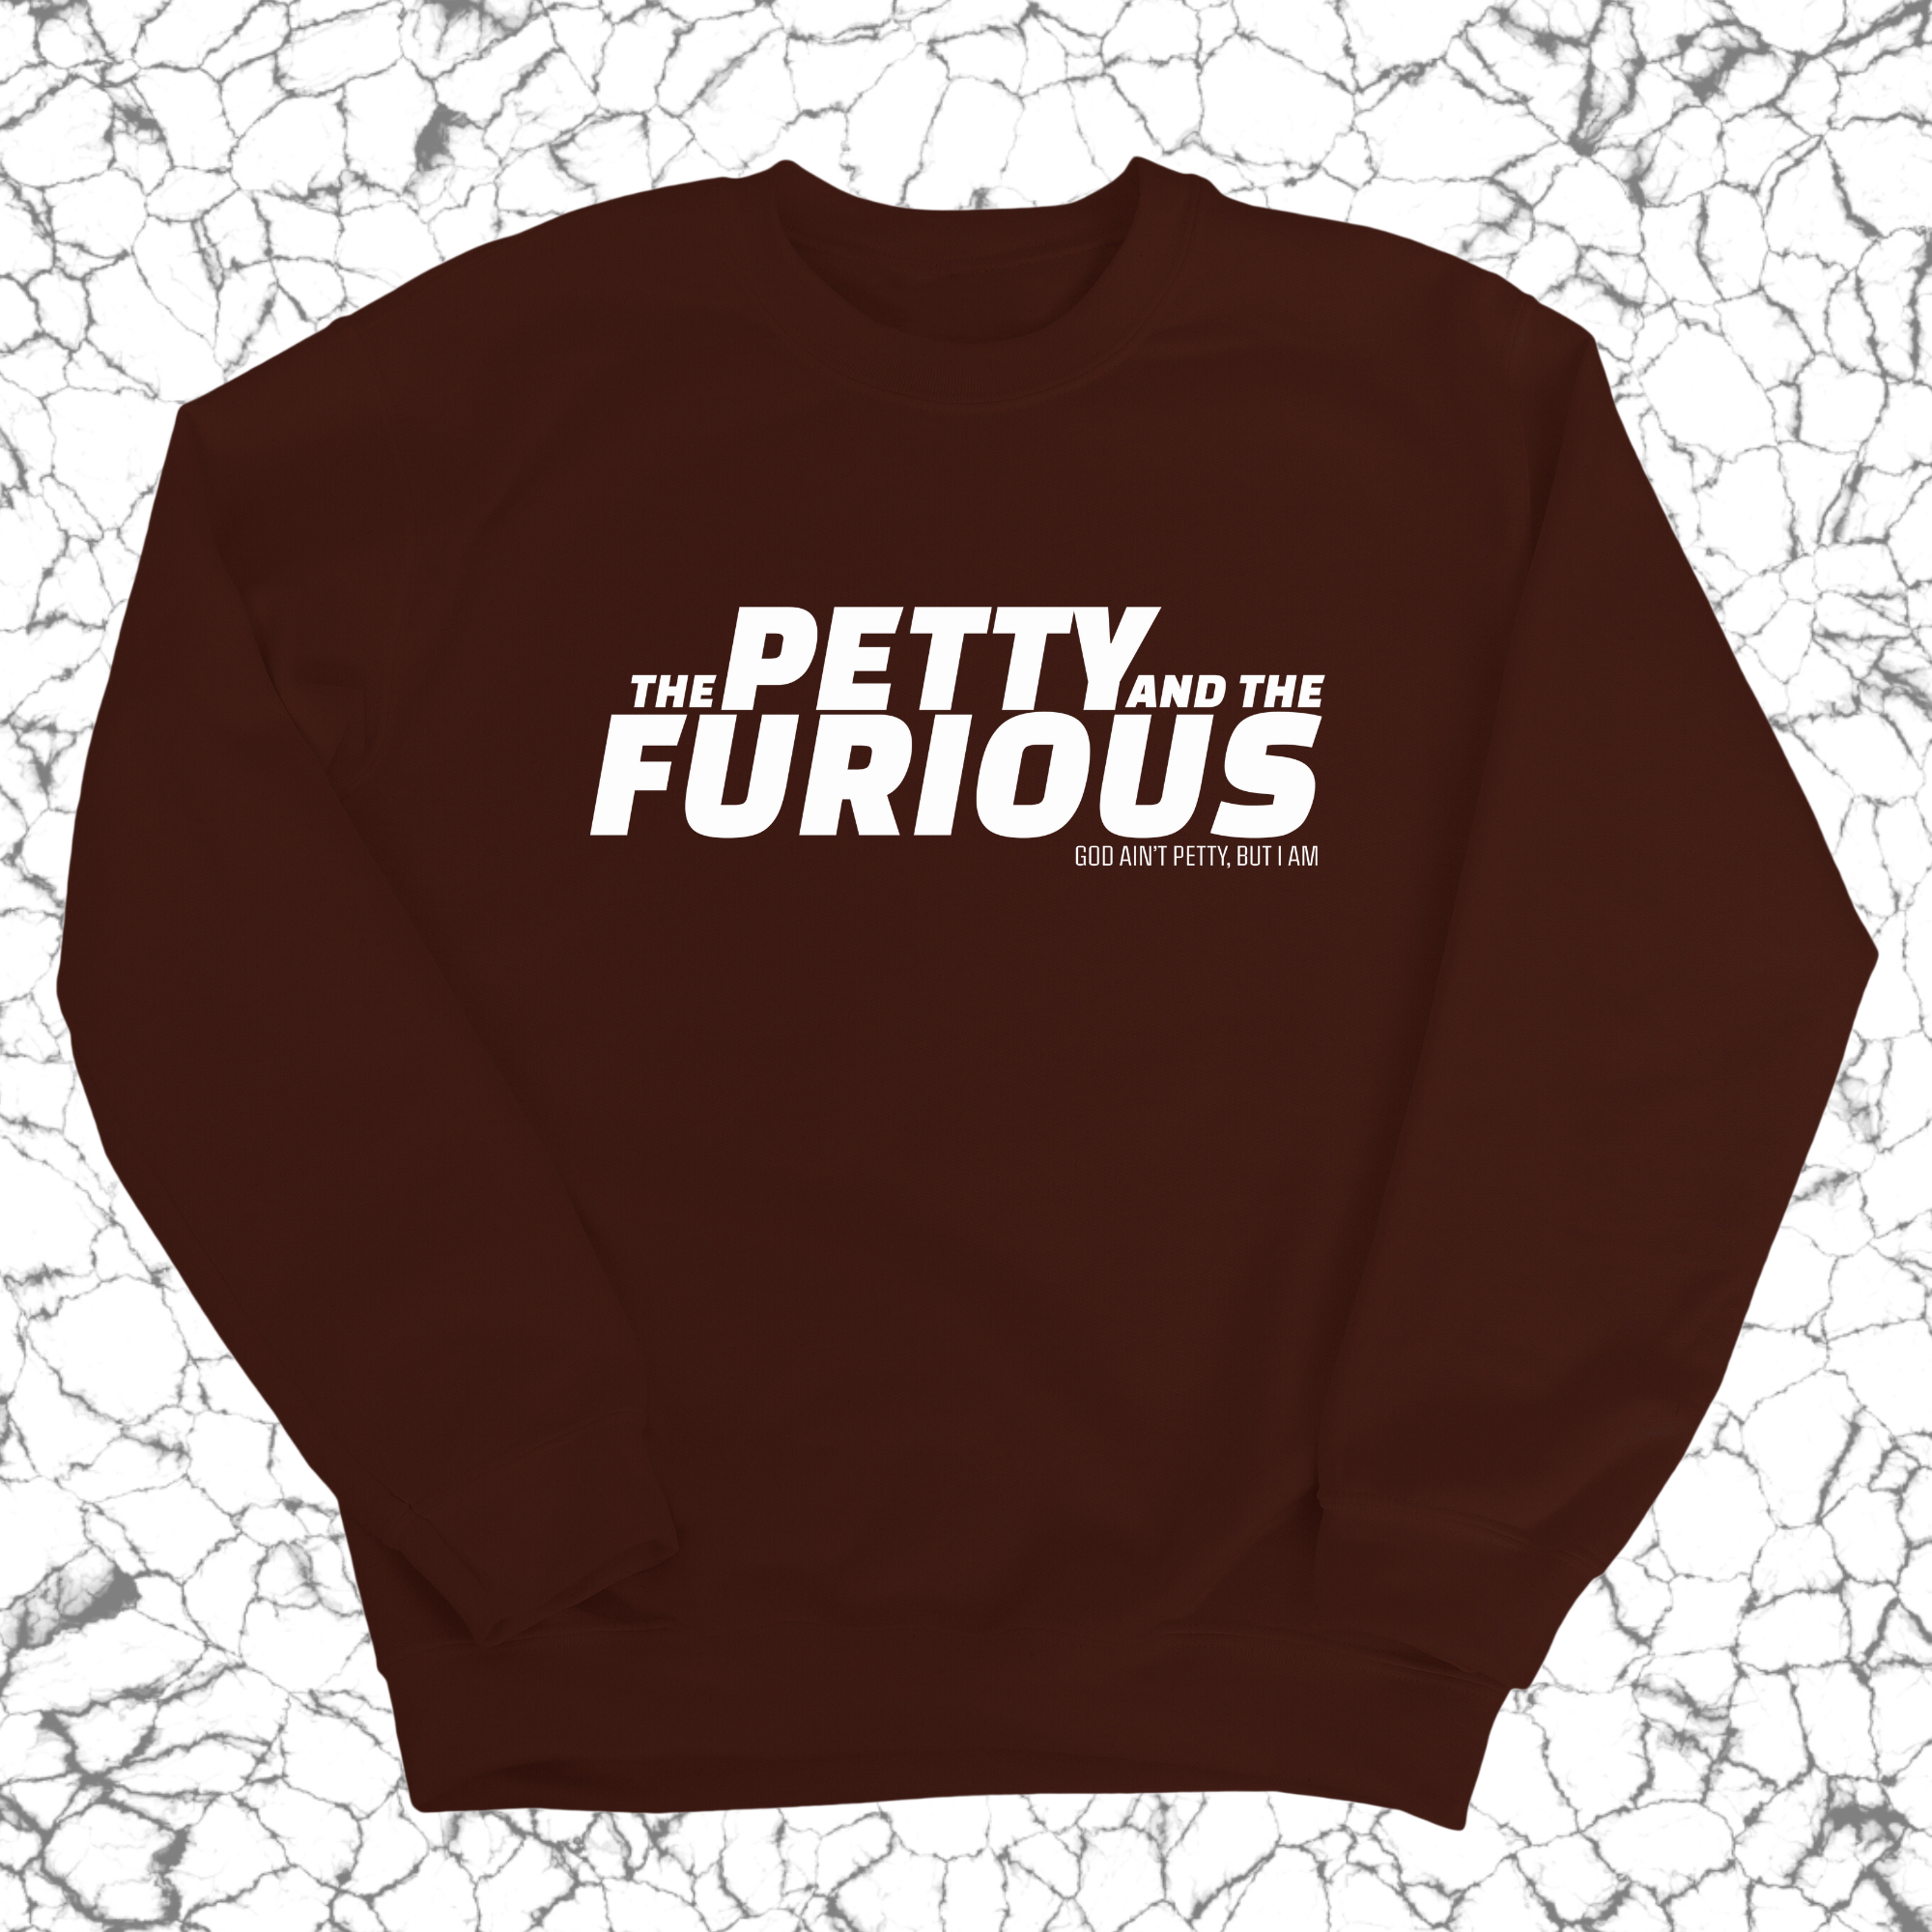 The Petty and the Furious Unisex Sweatshirt-Sweatshirt-The Original God Ain't Petty But I Am